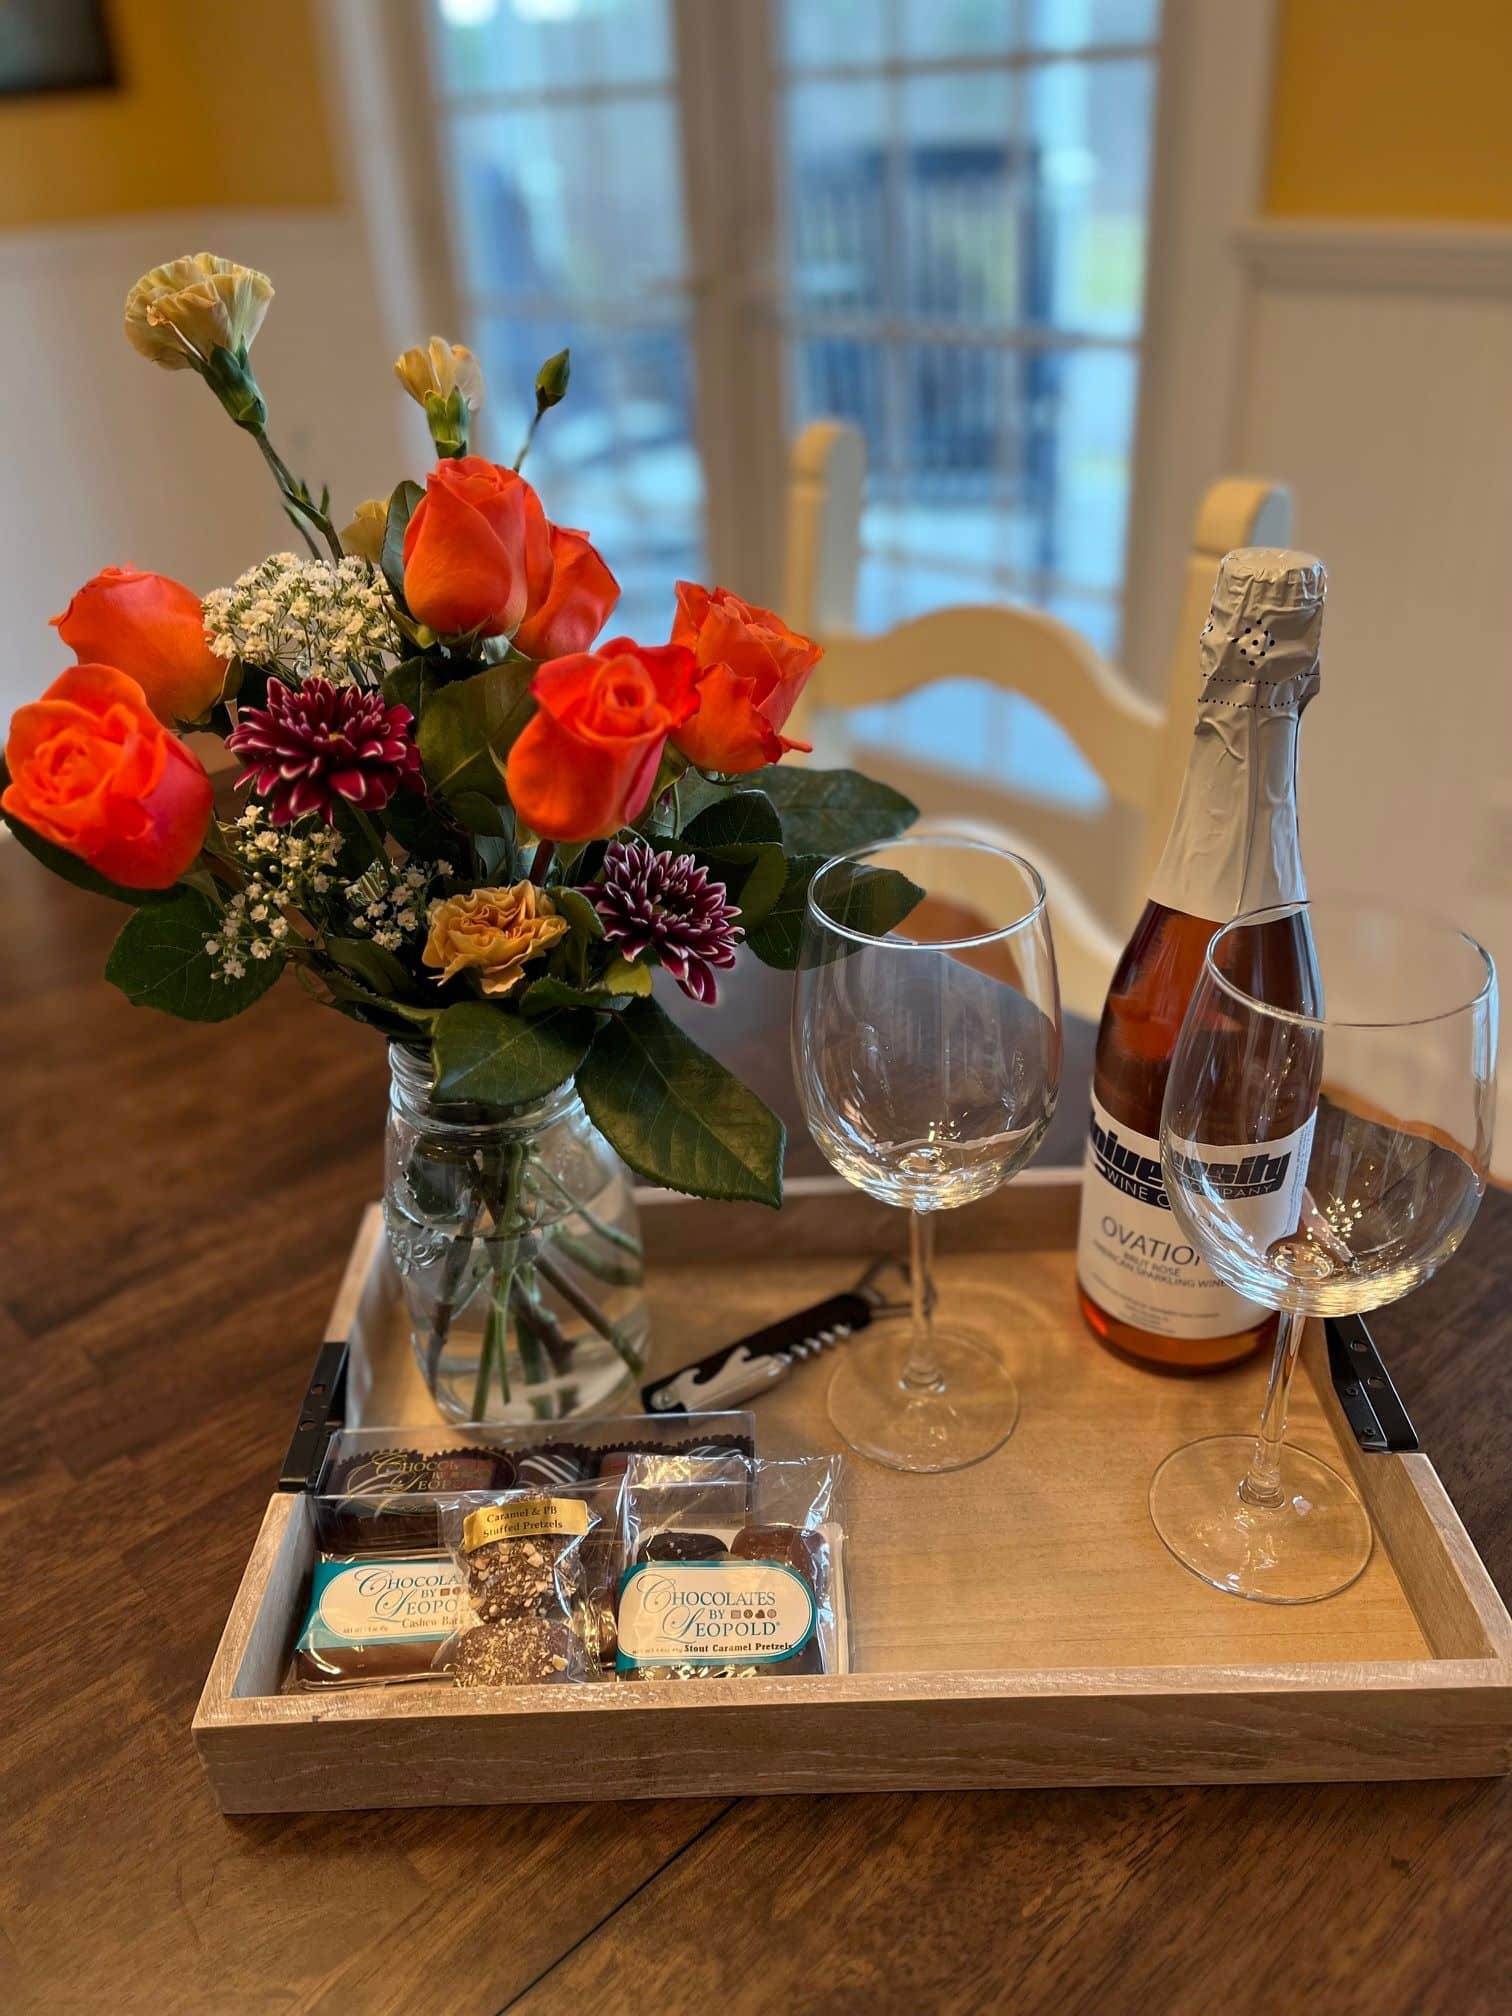 romance celebration package, flowers, wine, chocolate